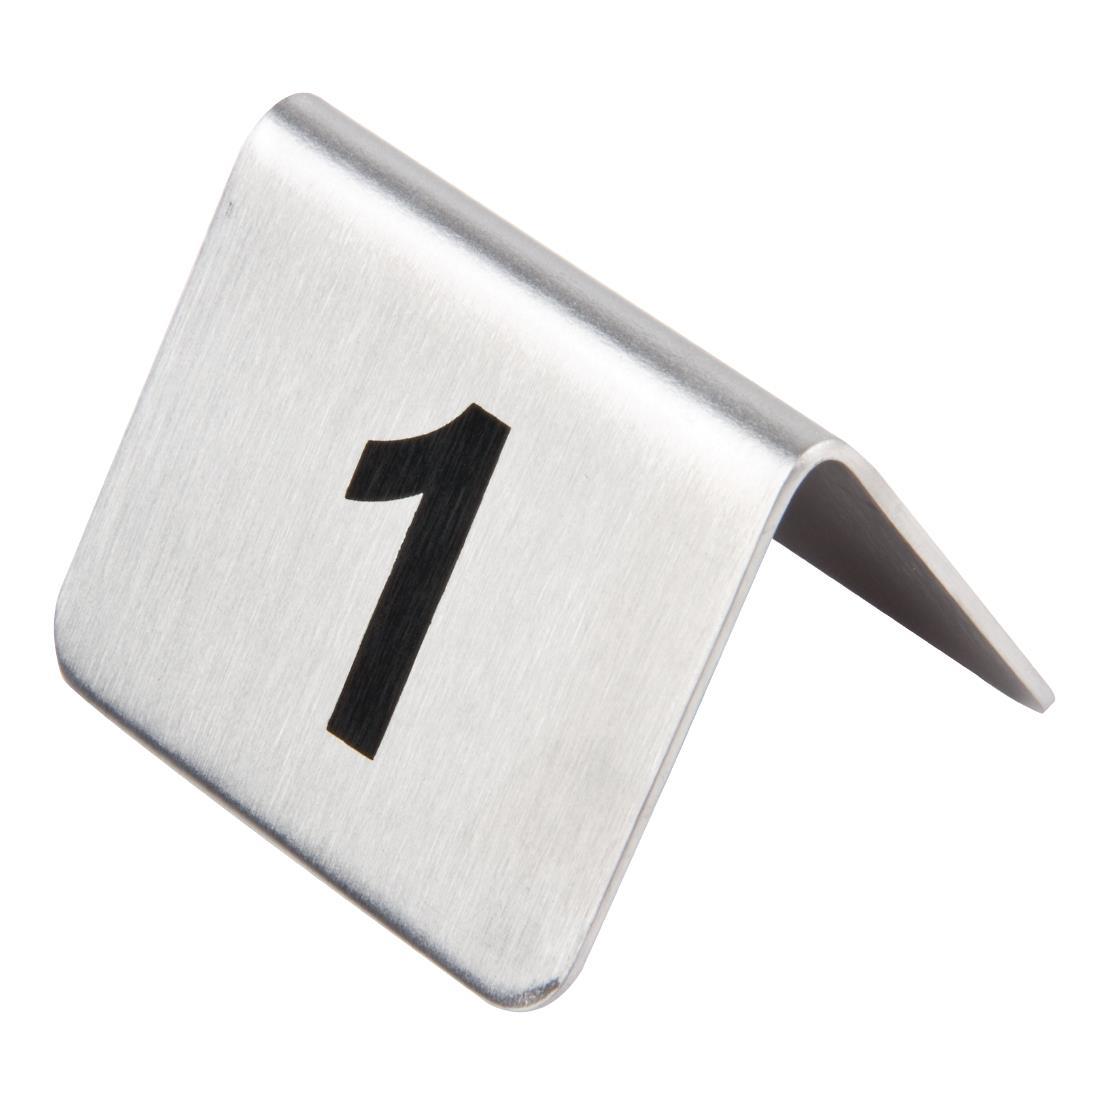 Stainless Steel Table Numbers 11-20 (Pack of 10) - U047  - 2